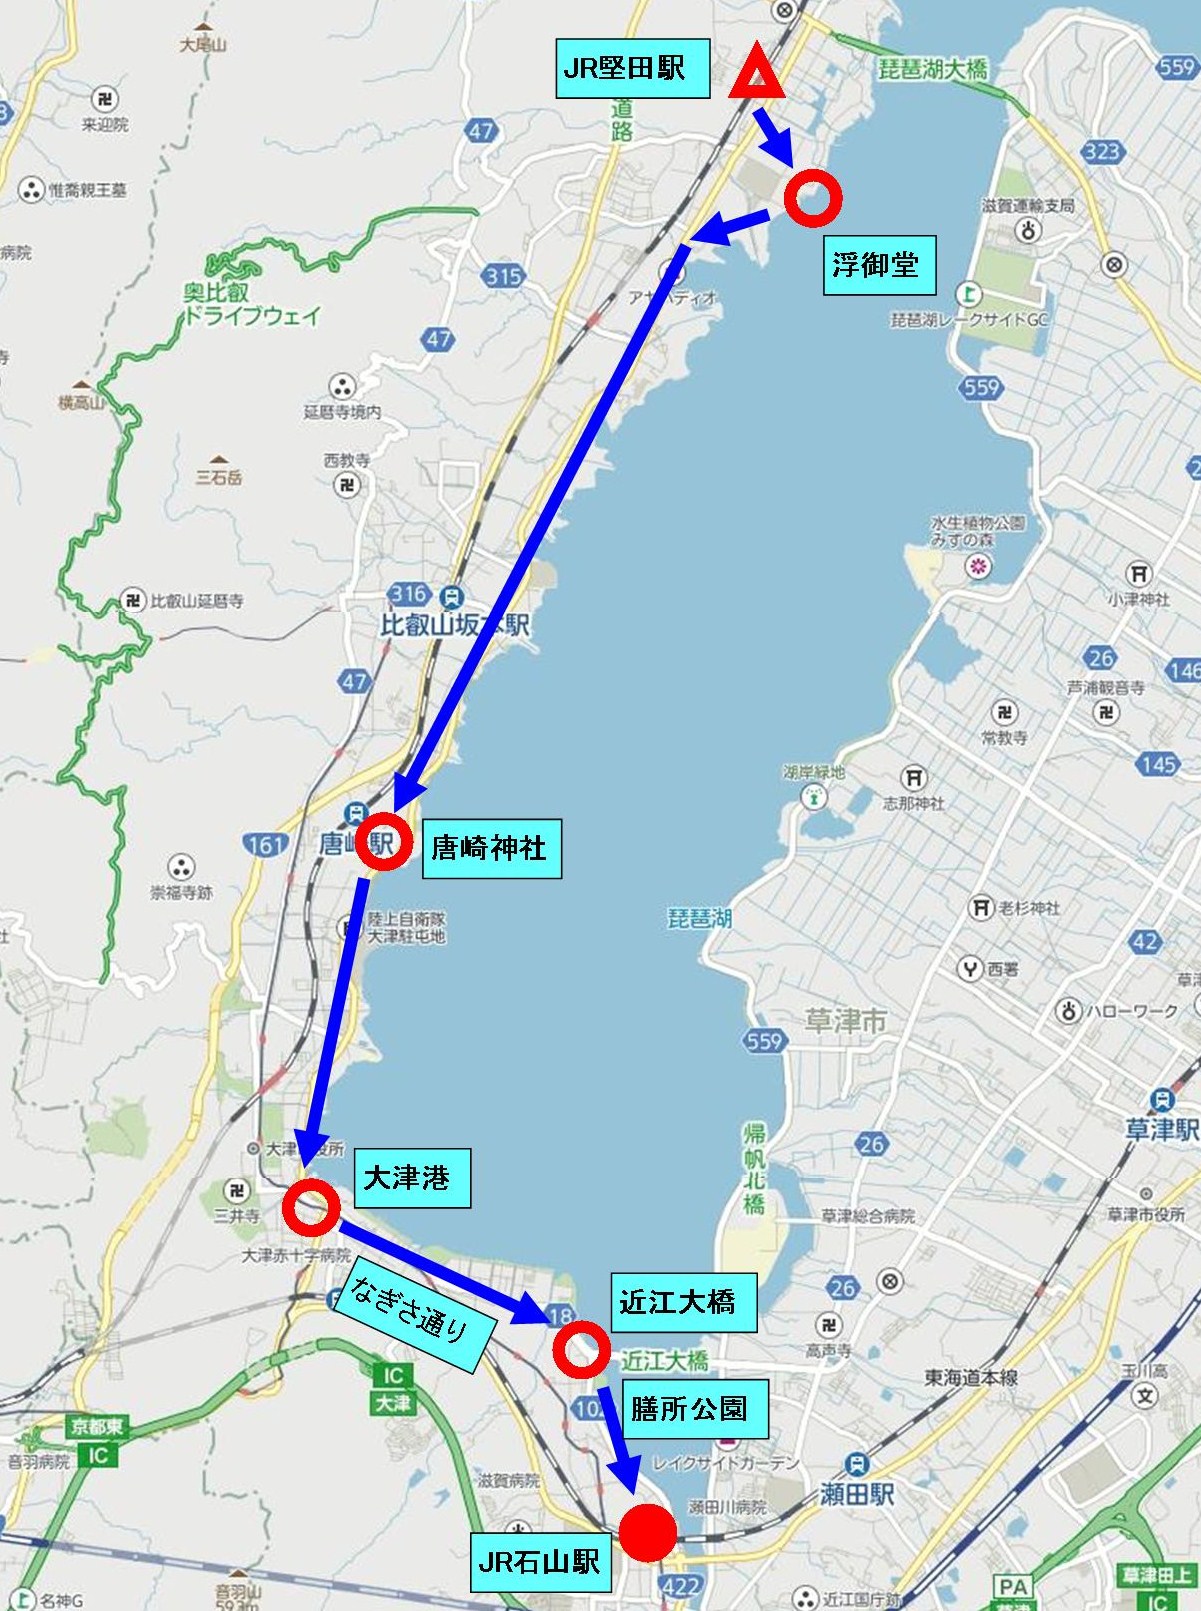 b琵琶湖地図.jpg